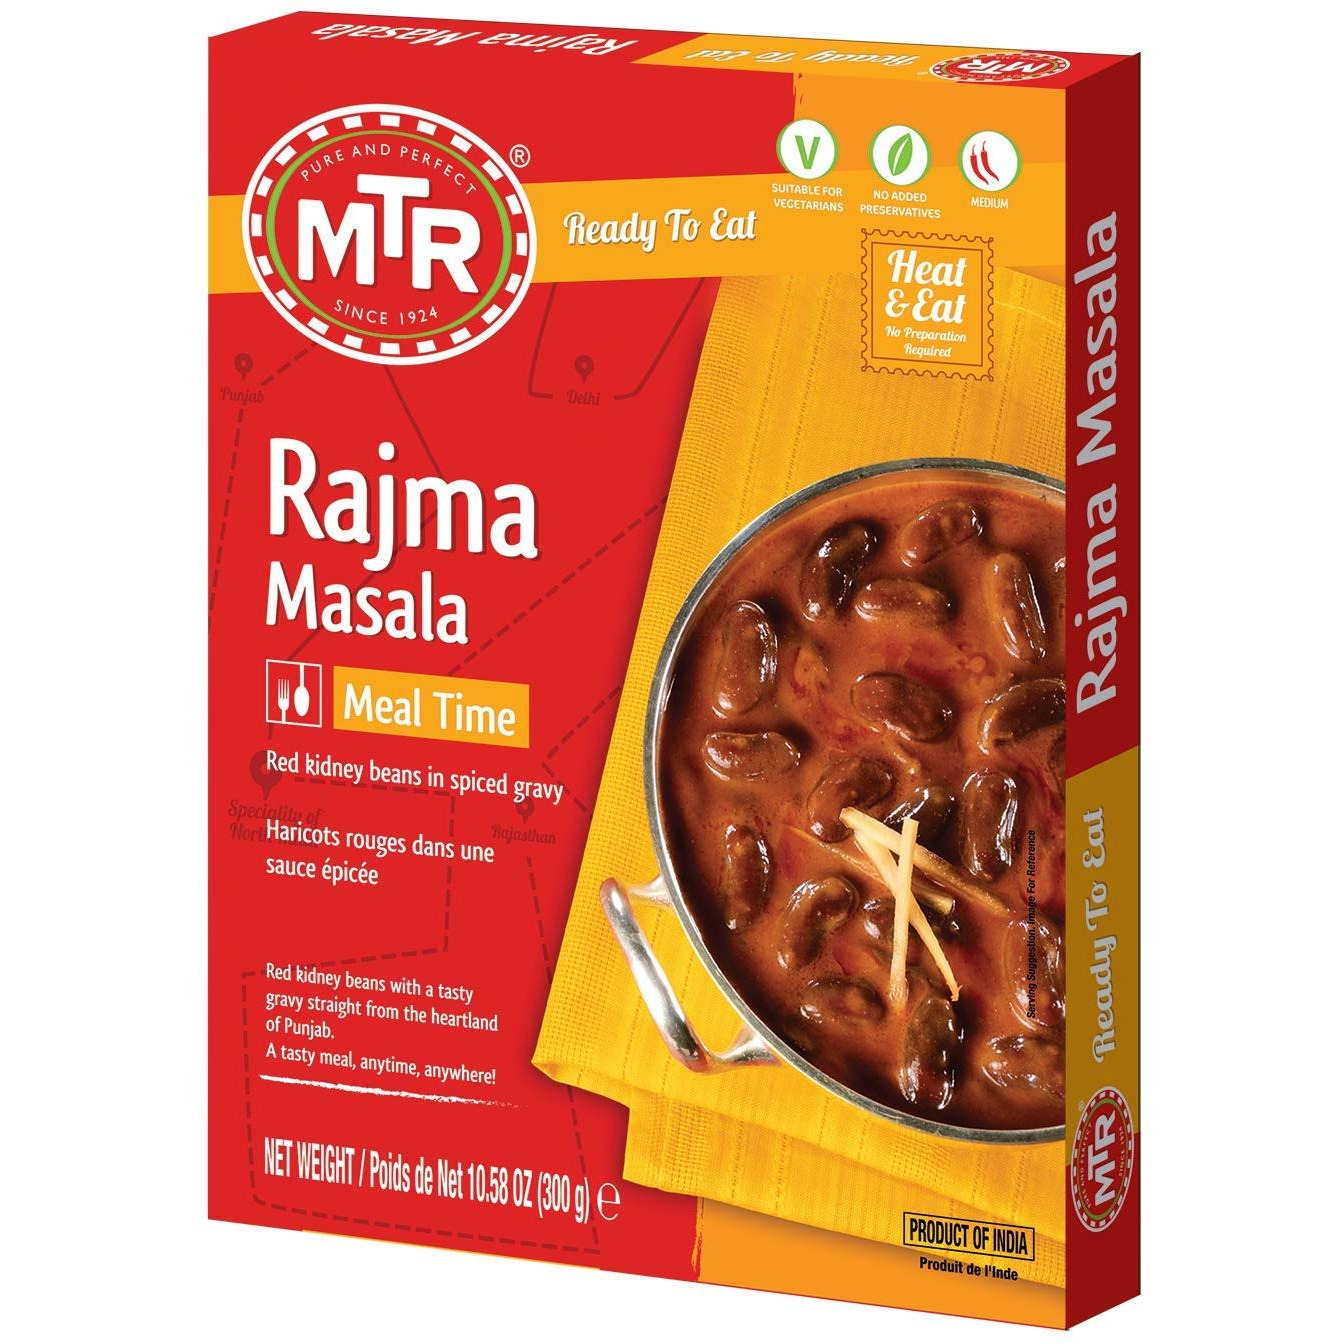 Case of 20 - Mtr Ready To Eat Rajma Masala - 300 Gm (10.58 Oz)